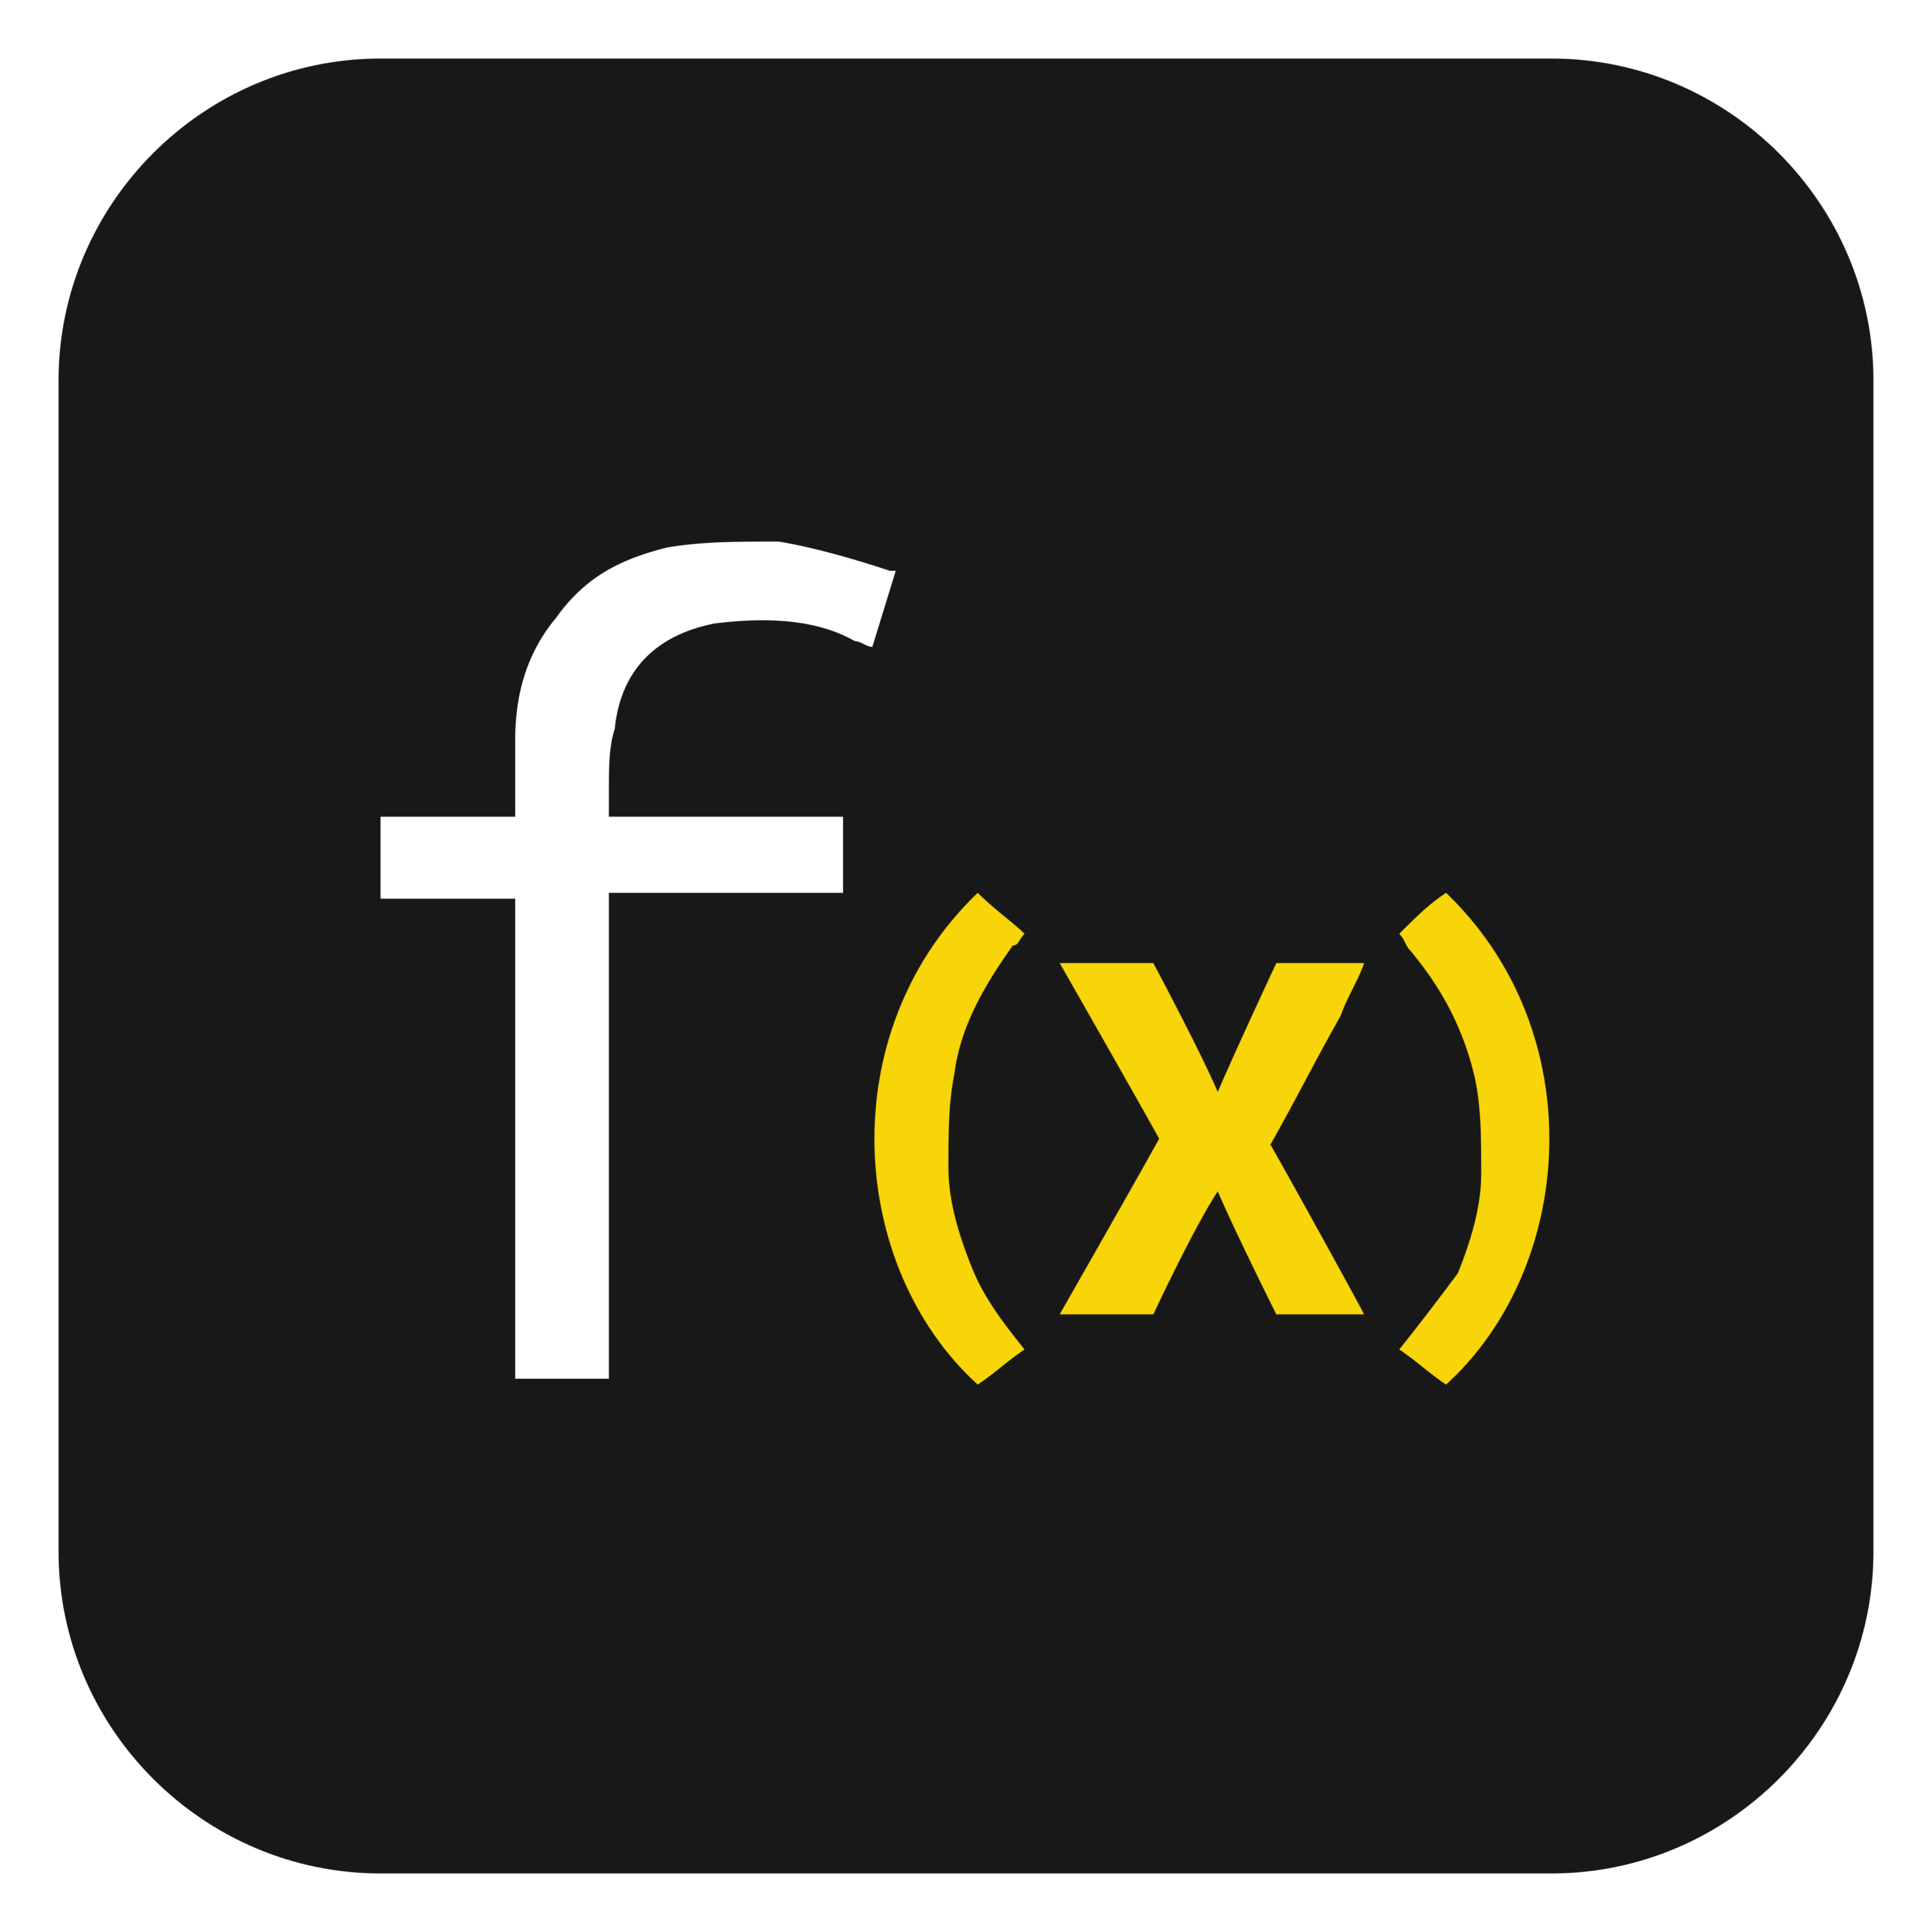 Function X (FX) Logo